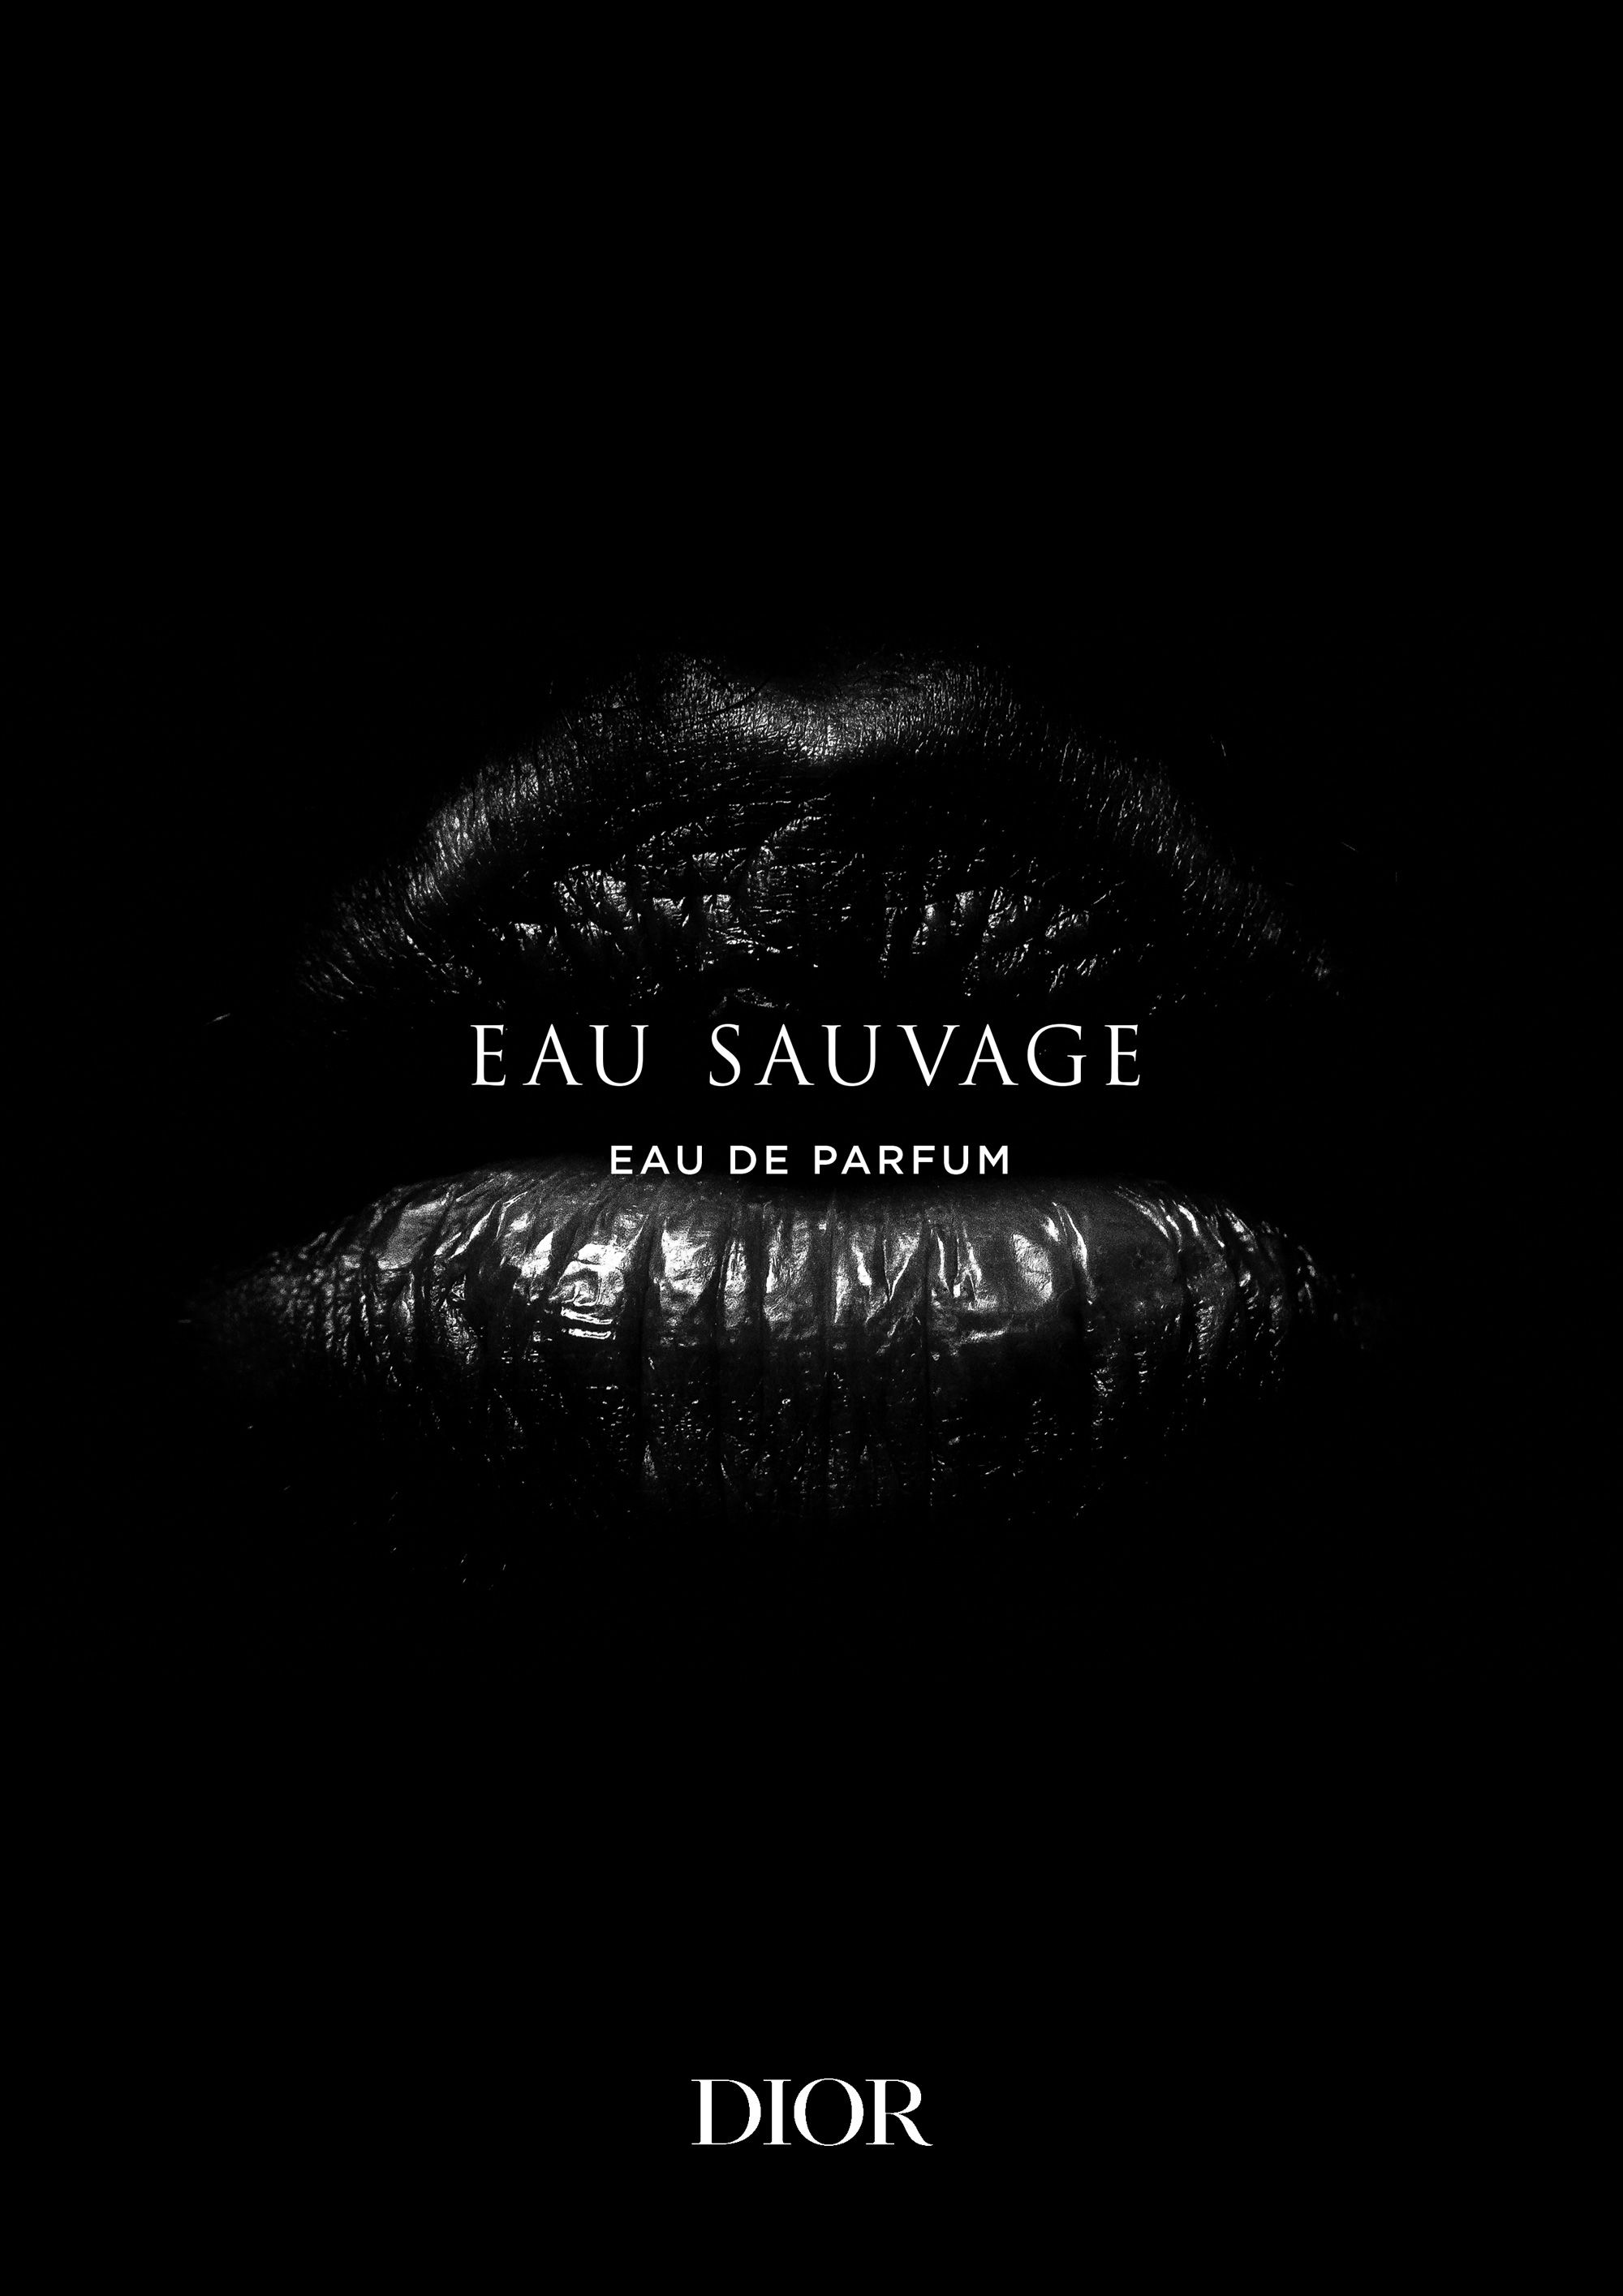 Dior sauvage fragrance campaign - Dior